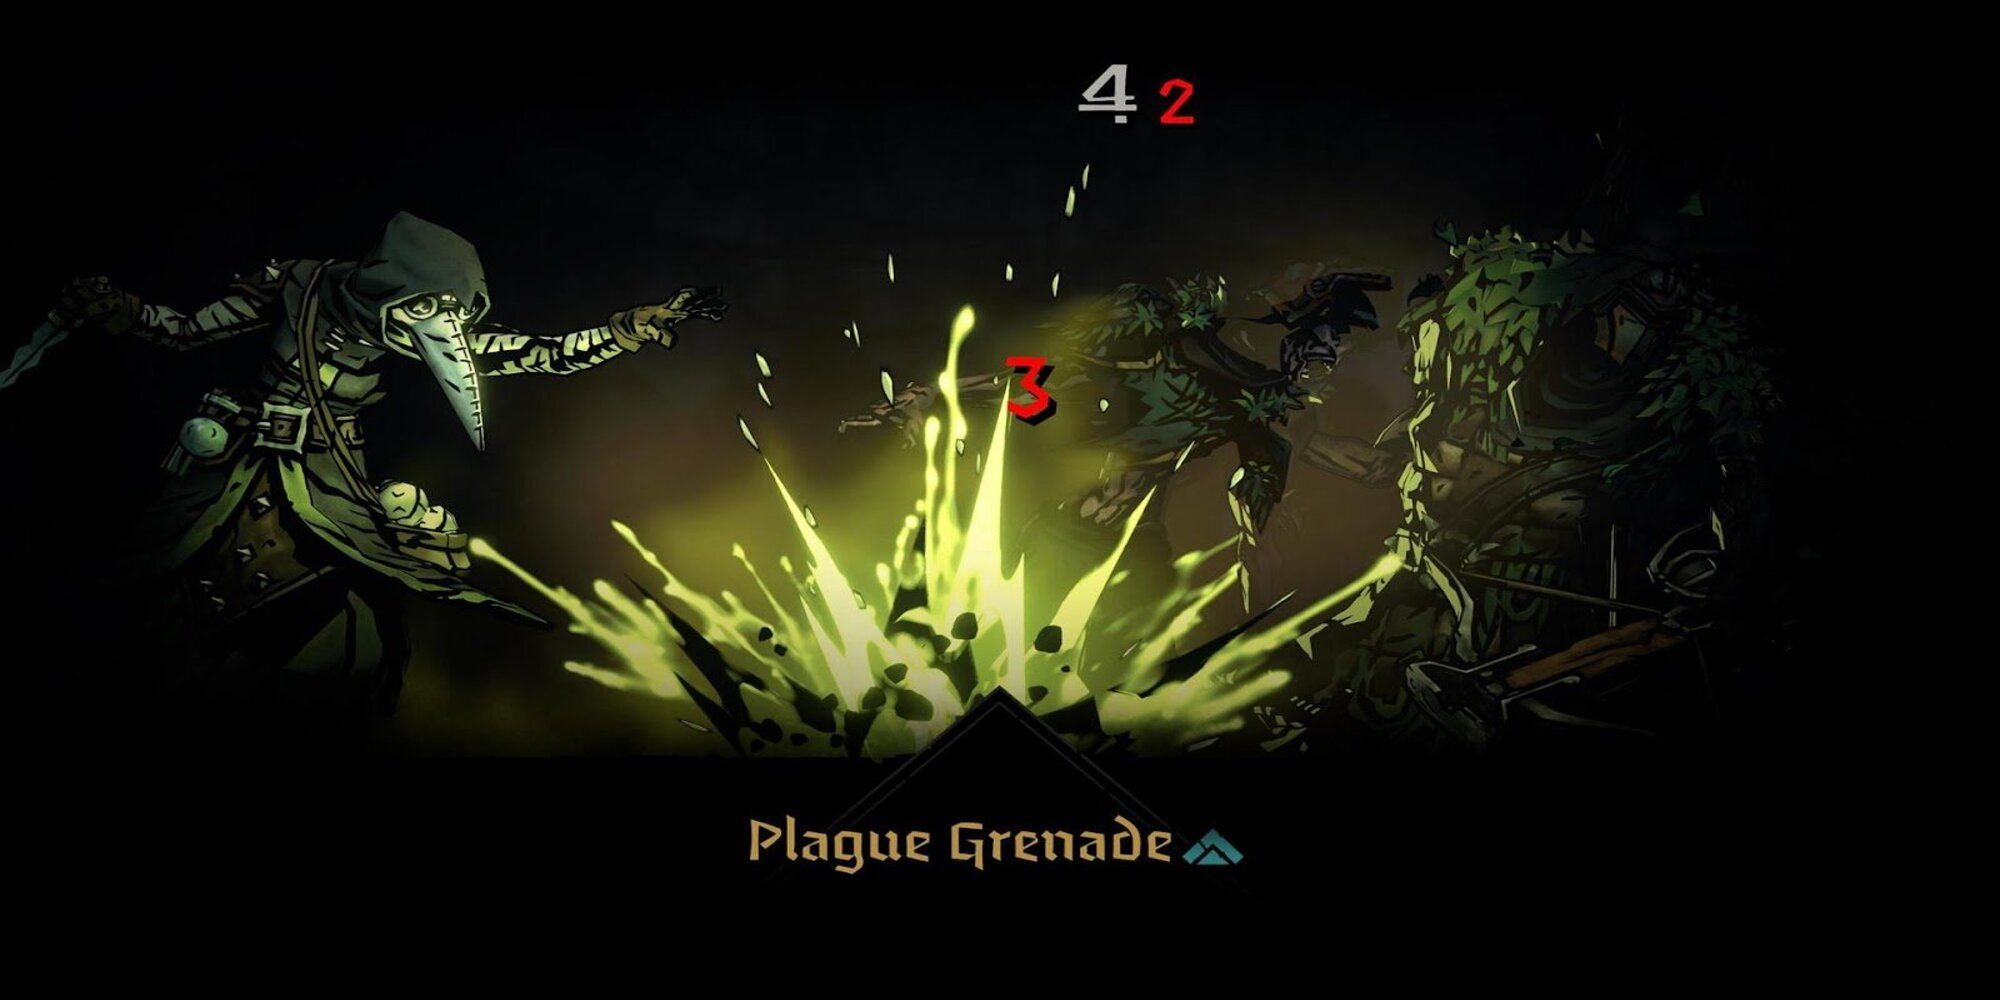 Plague doctor with plague grenade attack